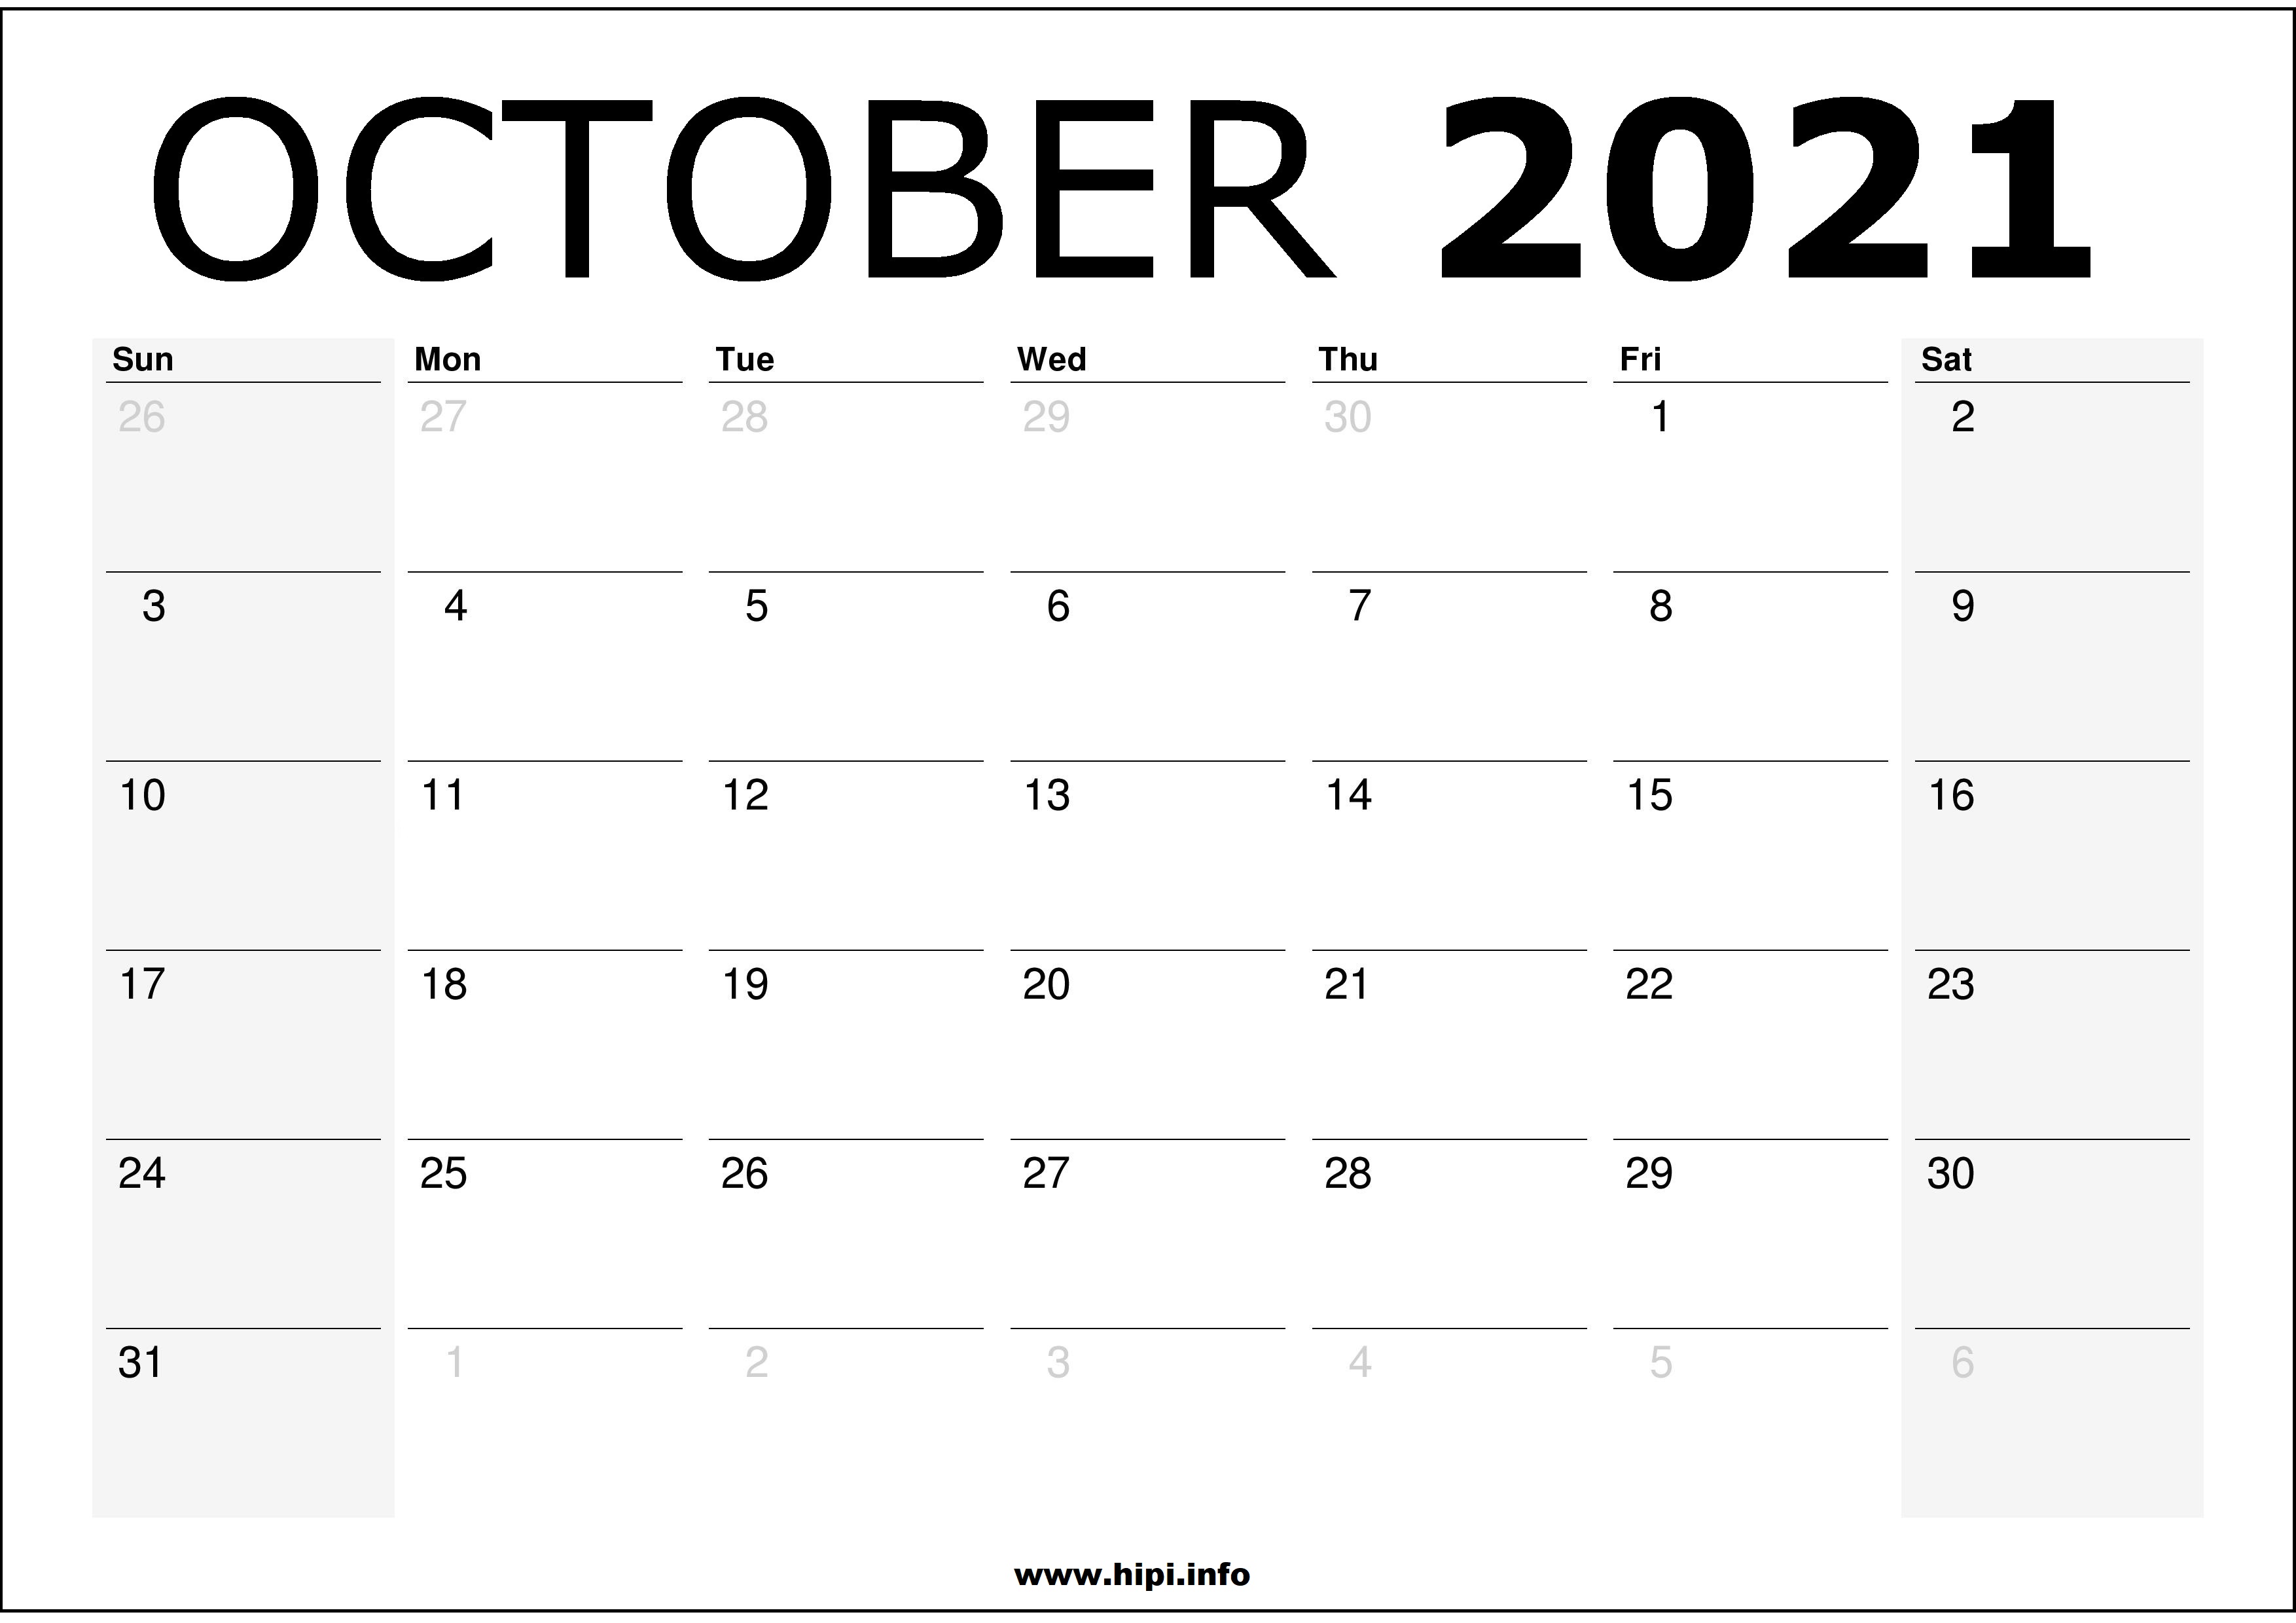 Free Desktop Calendar Wallpaper October 2021 | 2022 Calendar